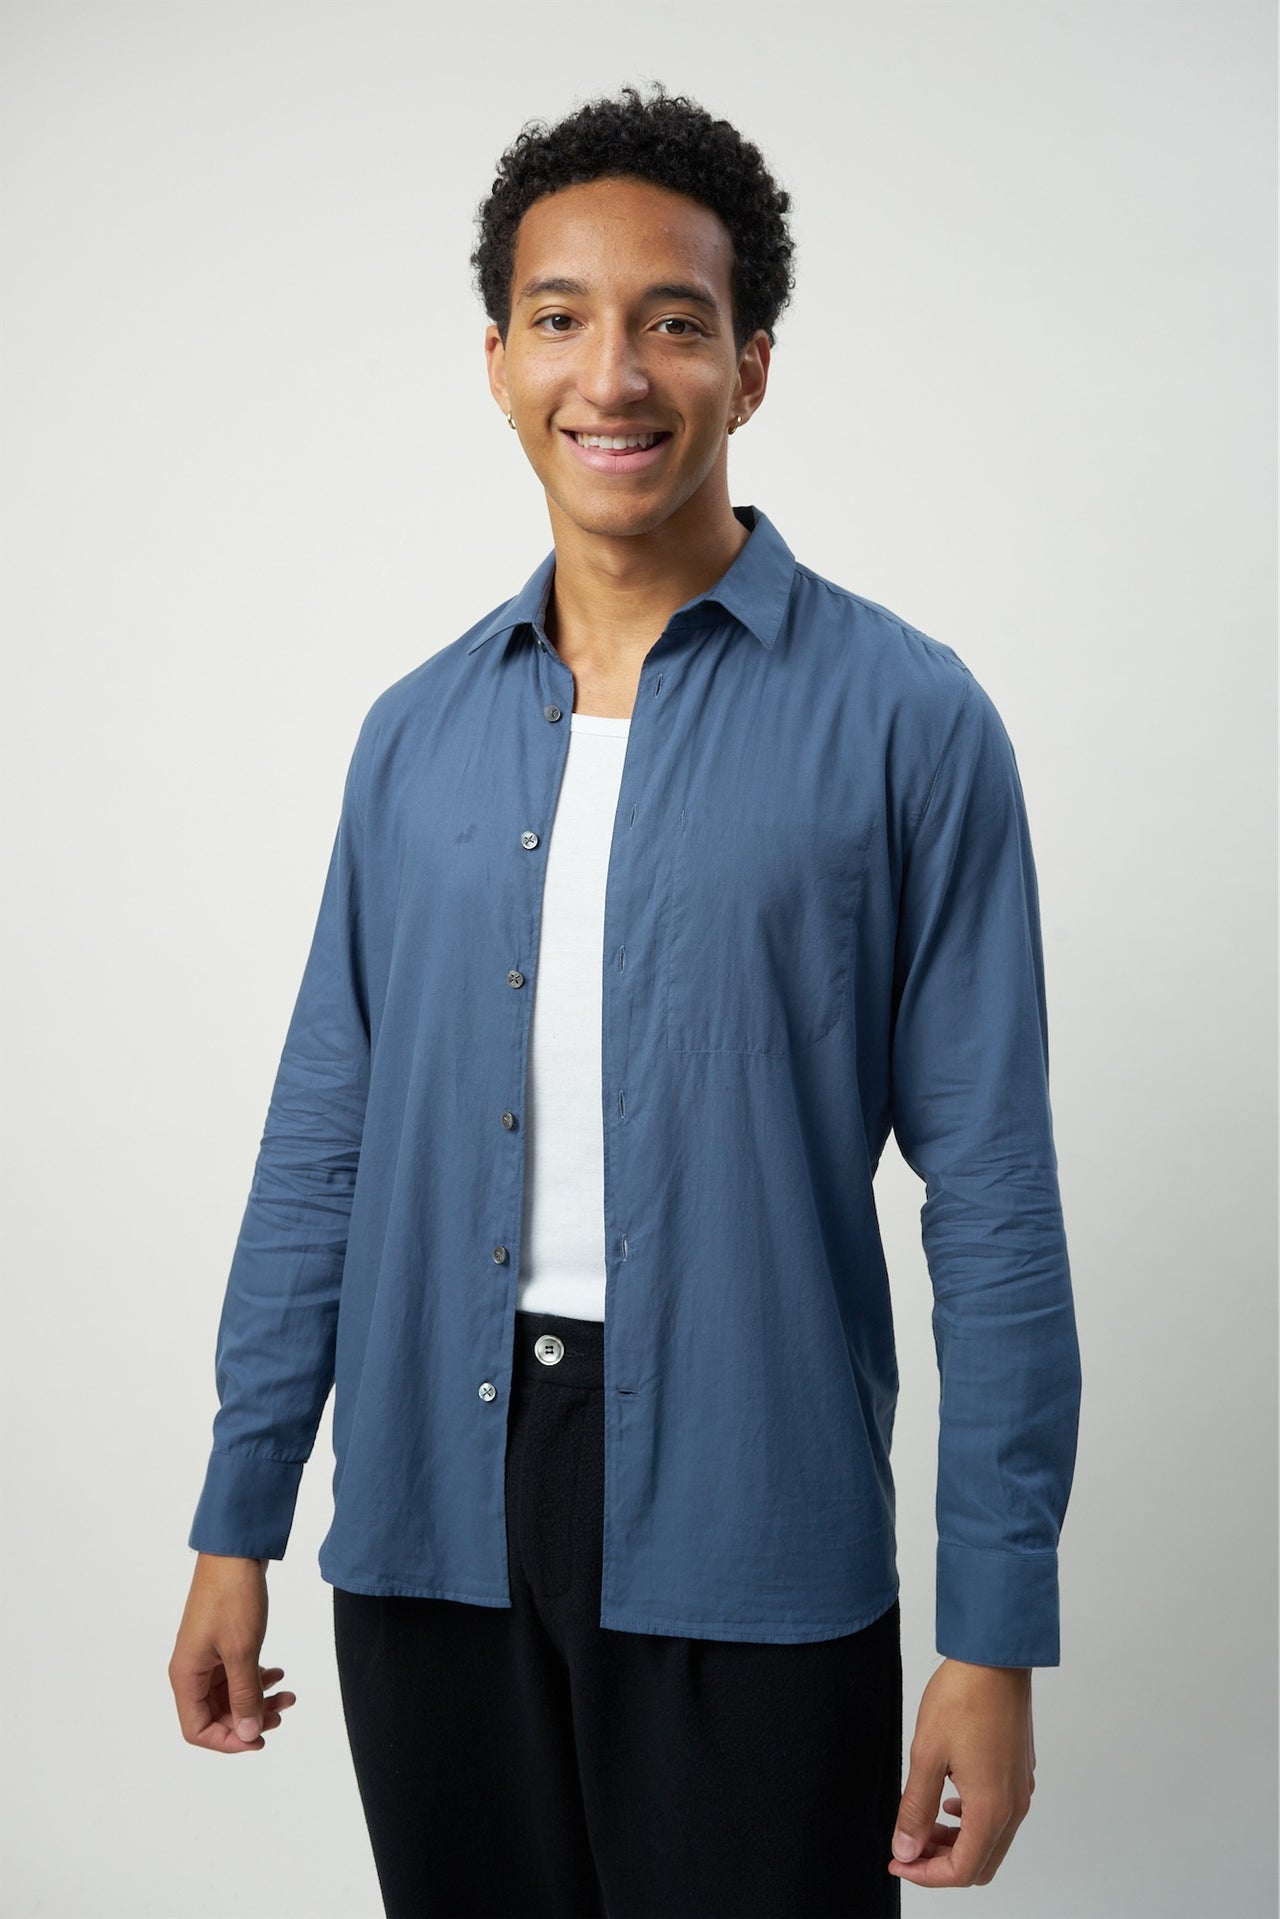 Feel Good Shirt in a Denim Blue Soft Exceptional Egyptian Nile Delta Giza 87 Italian Cotton